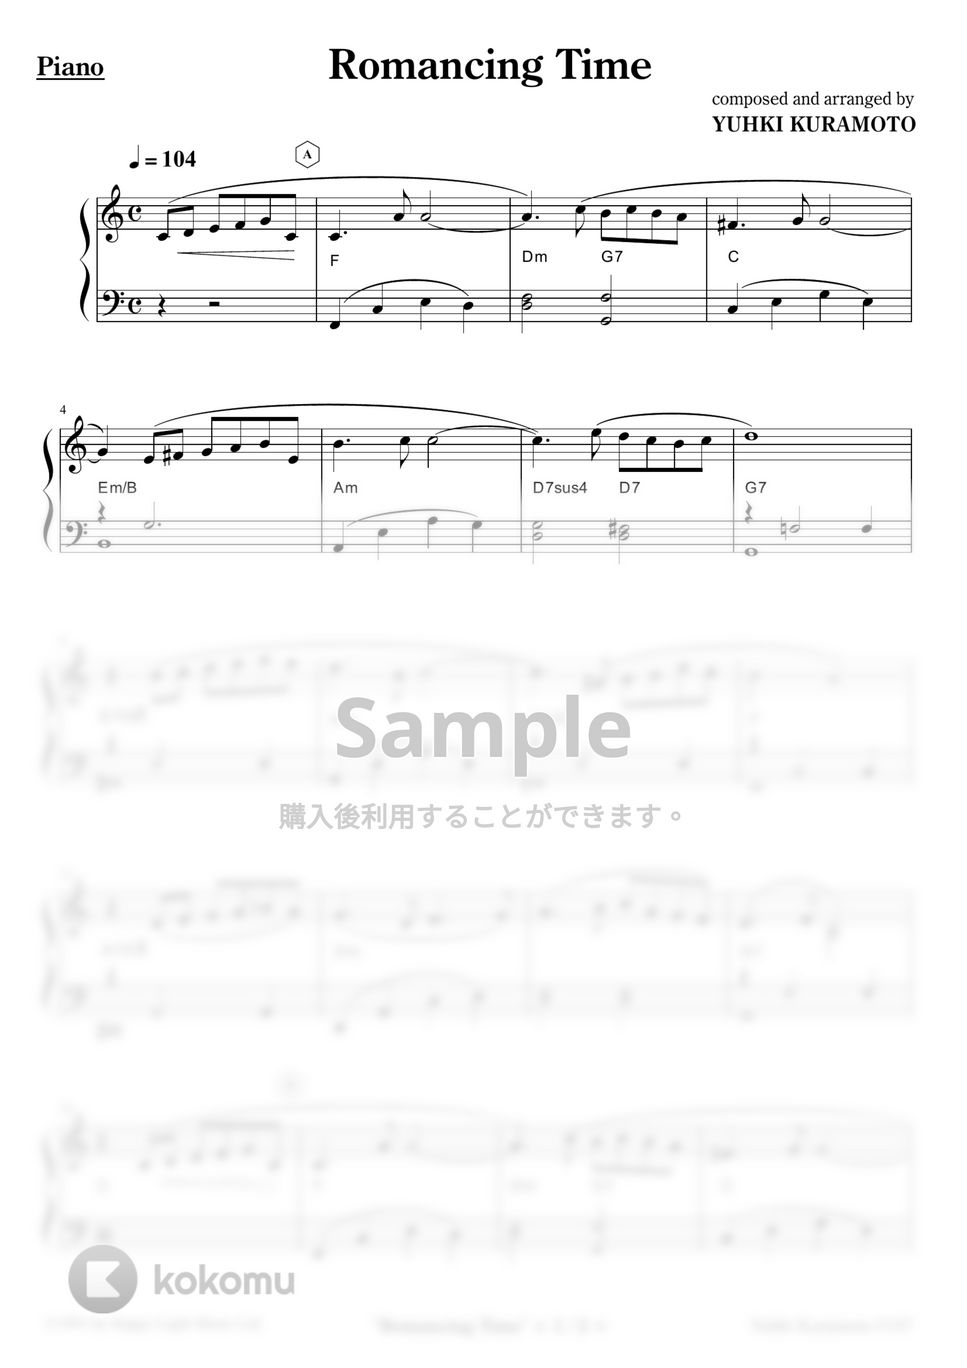 Yuhki Kuramoto - Romancing Time (Easy Ver.) by Yuhki Kuramoto